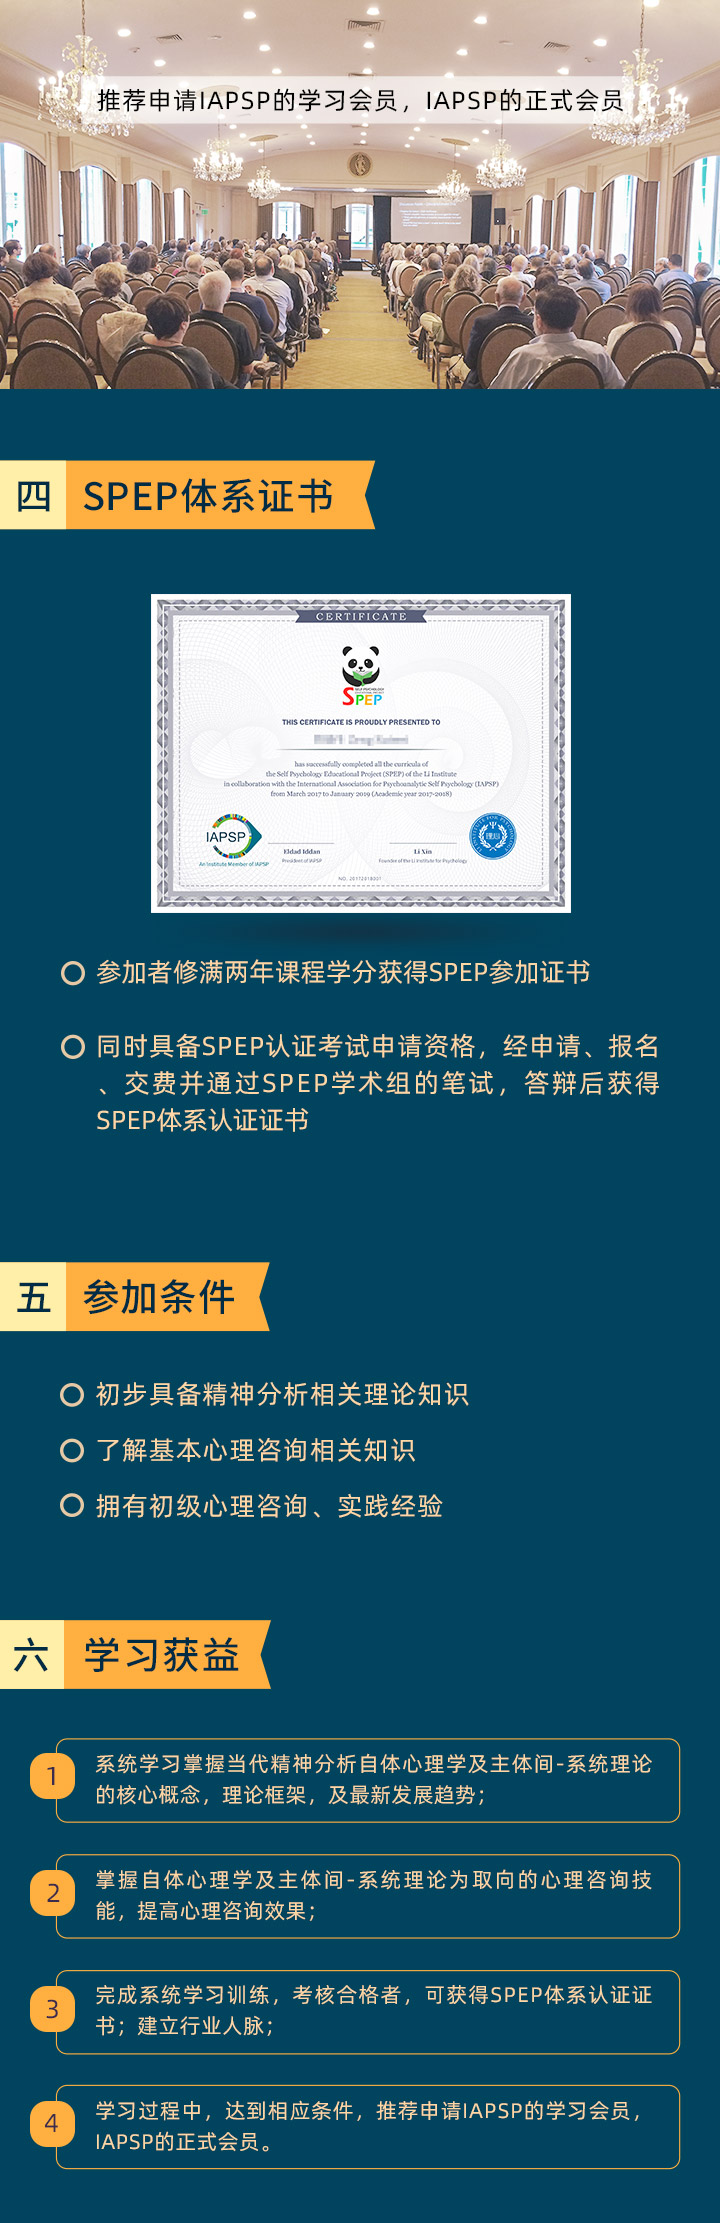 IAPSP中国项目-SPEP体系 自体心理学教育体系 招生简章